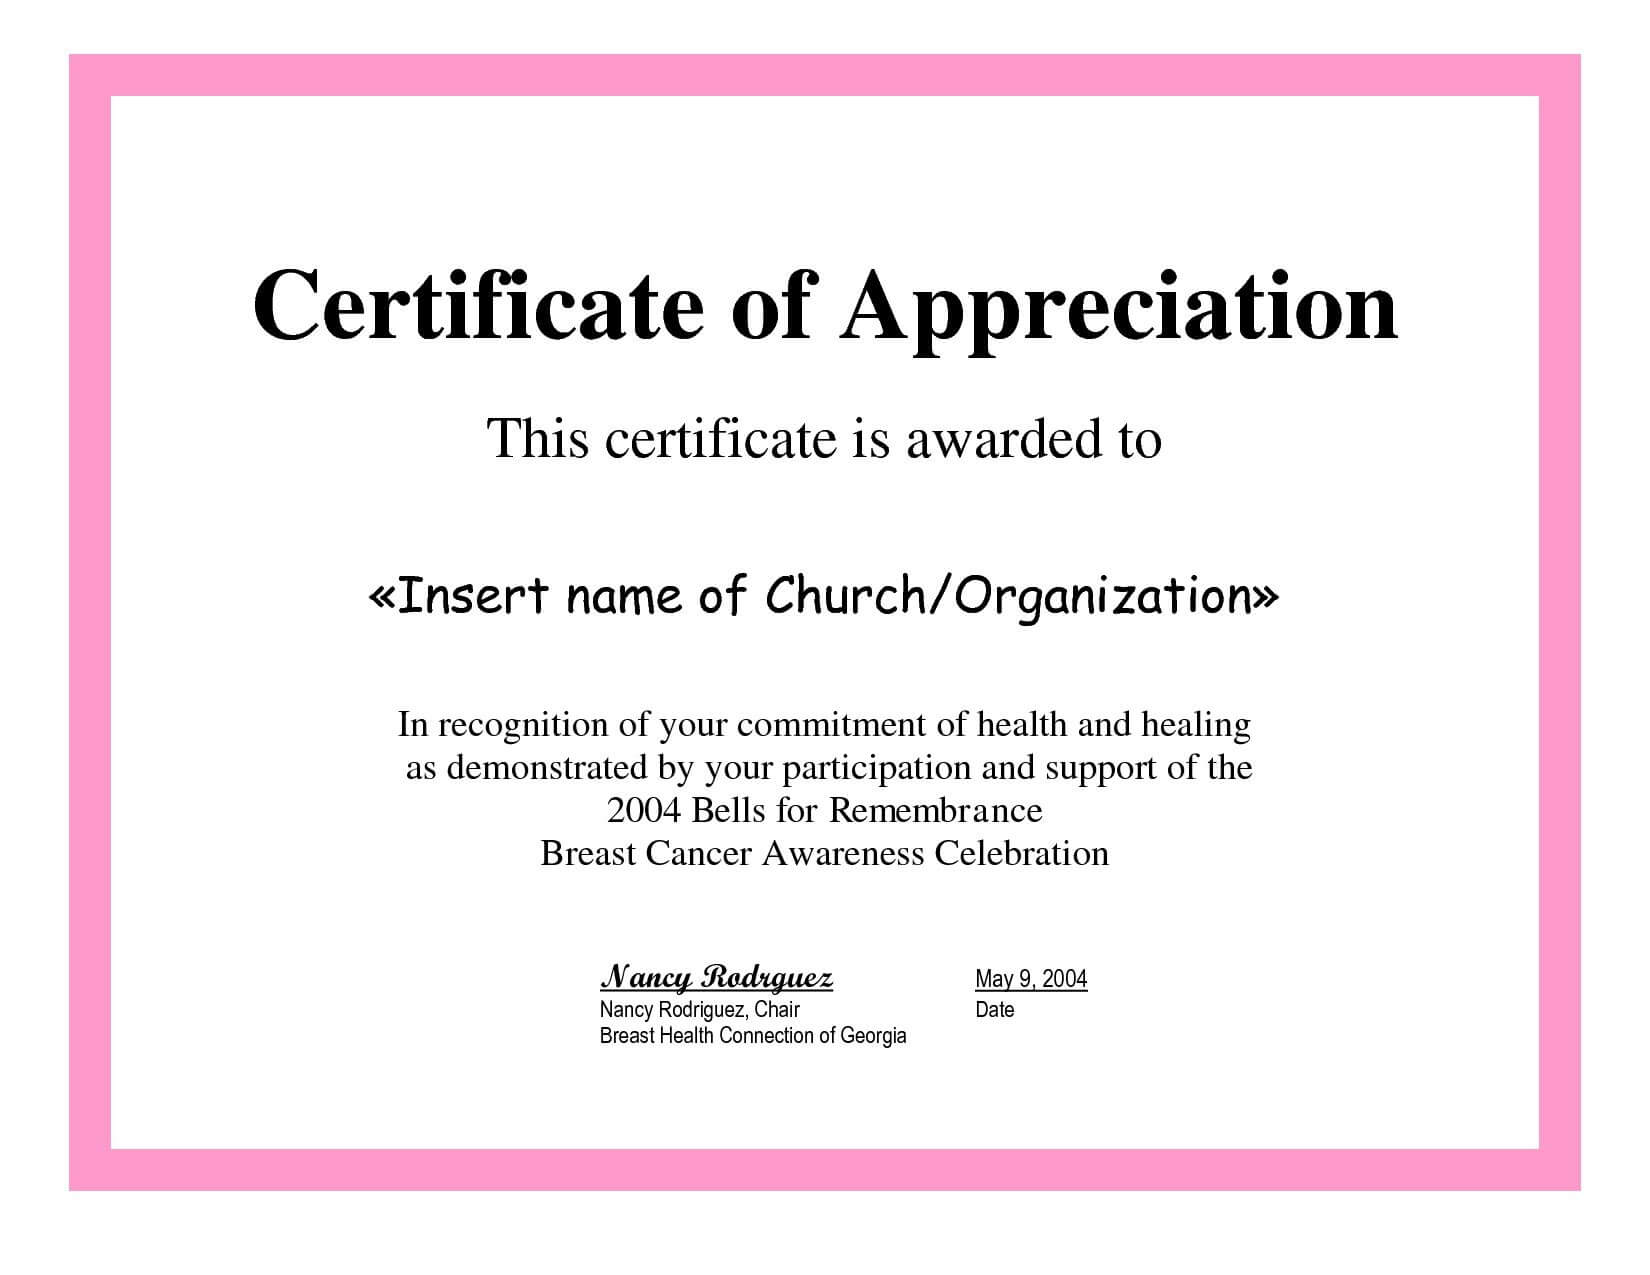 Teacher Appreciation Certificate Wording Calep midnightpig co For